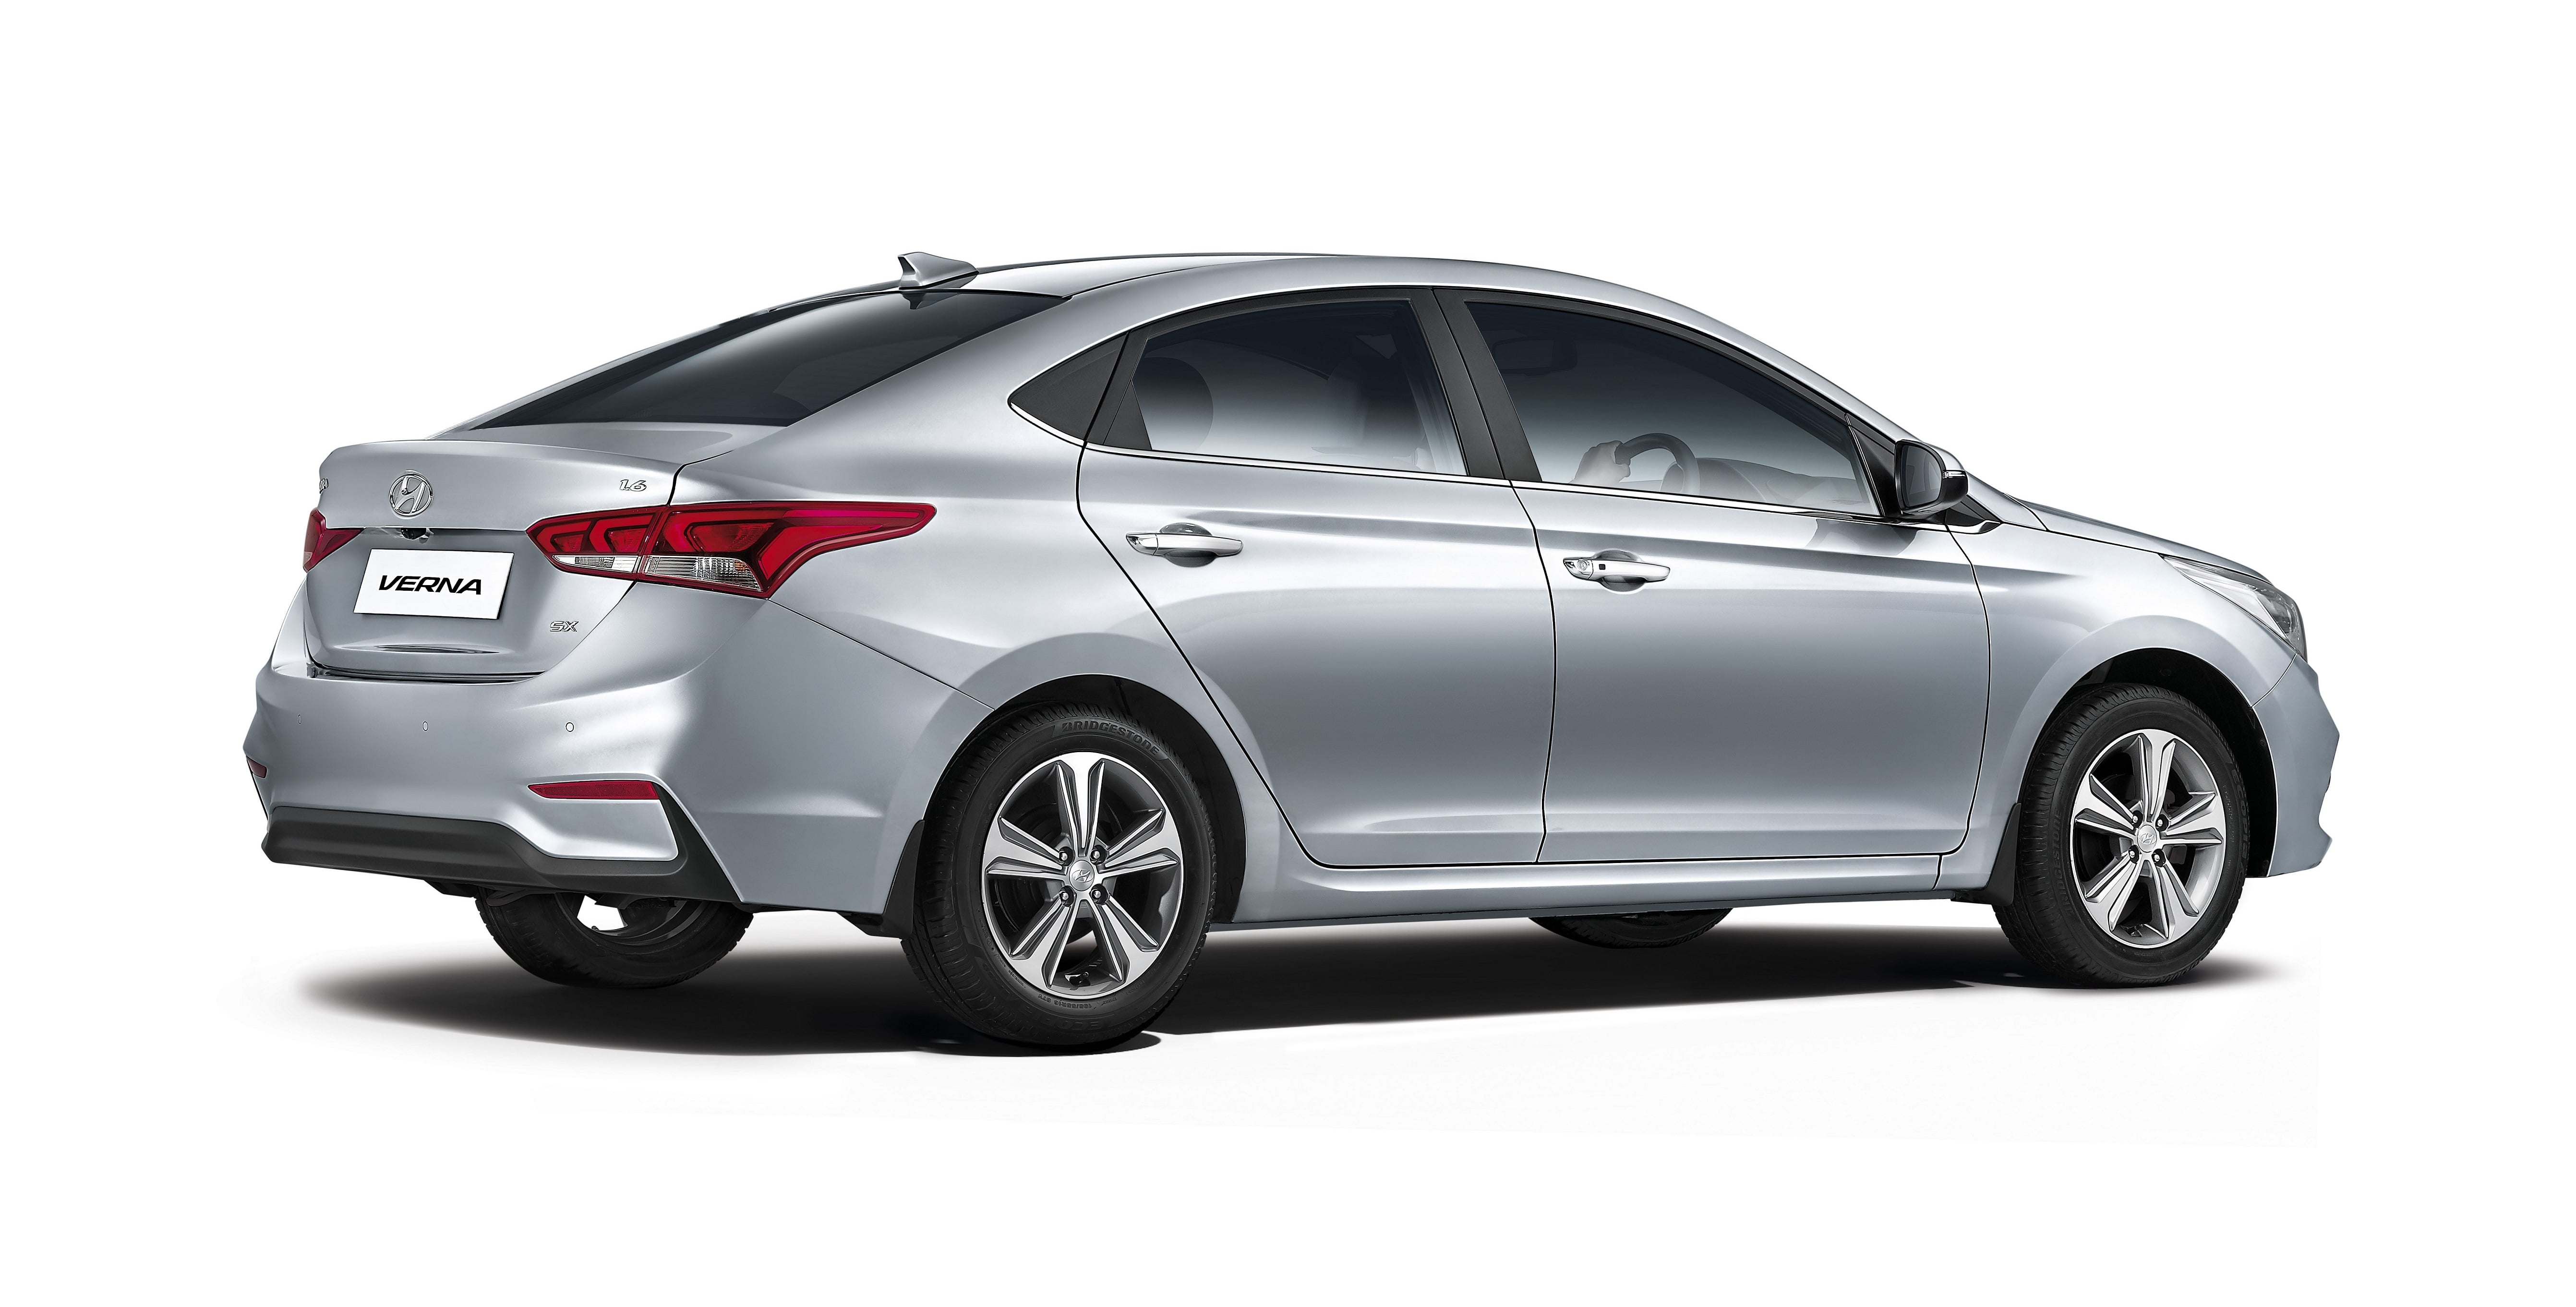 New 2022 Hyundai Verna vs Old Model Comparison Price 